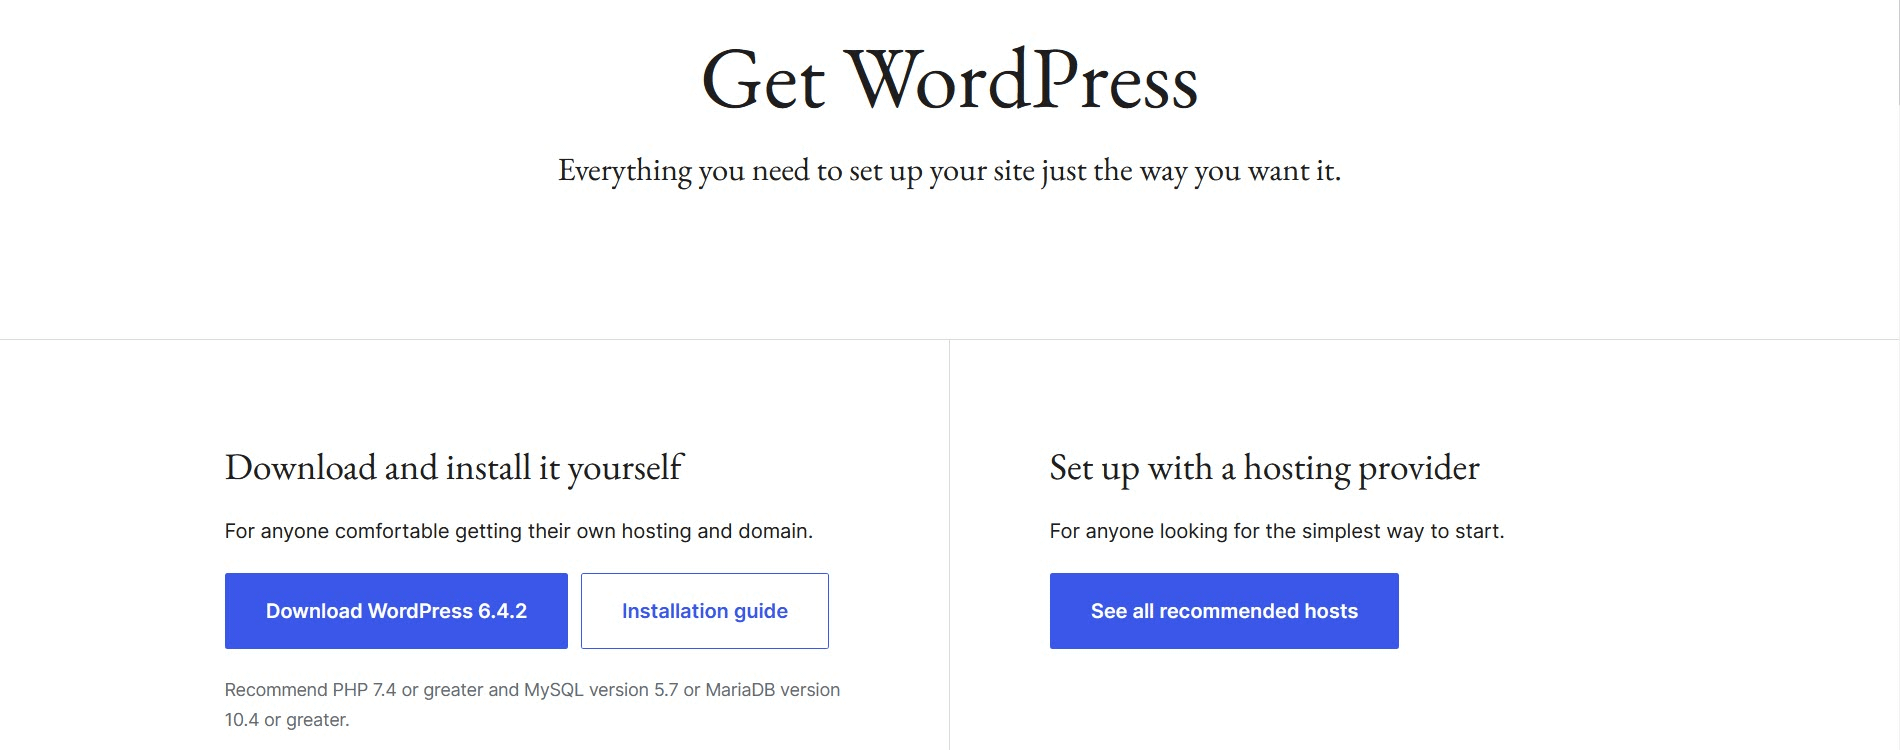 Get WordPress